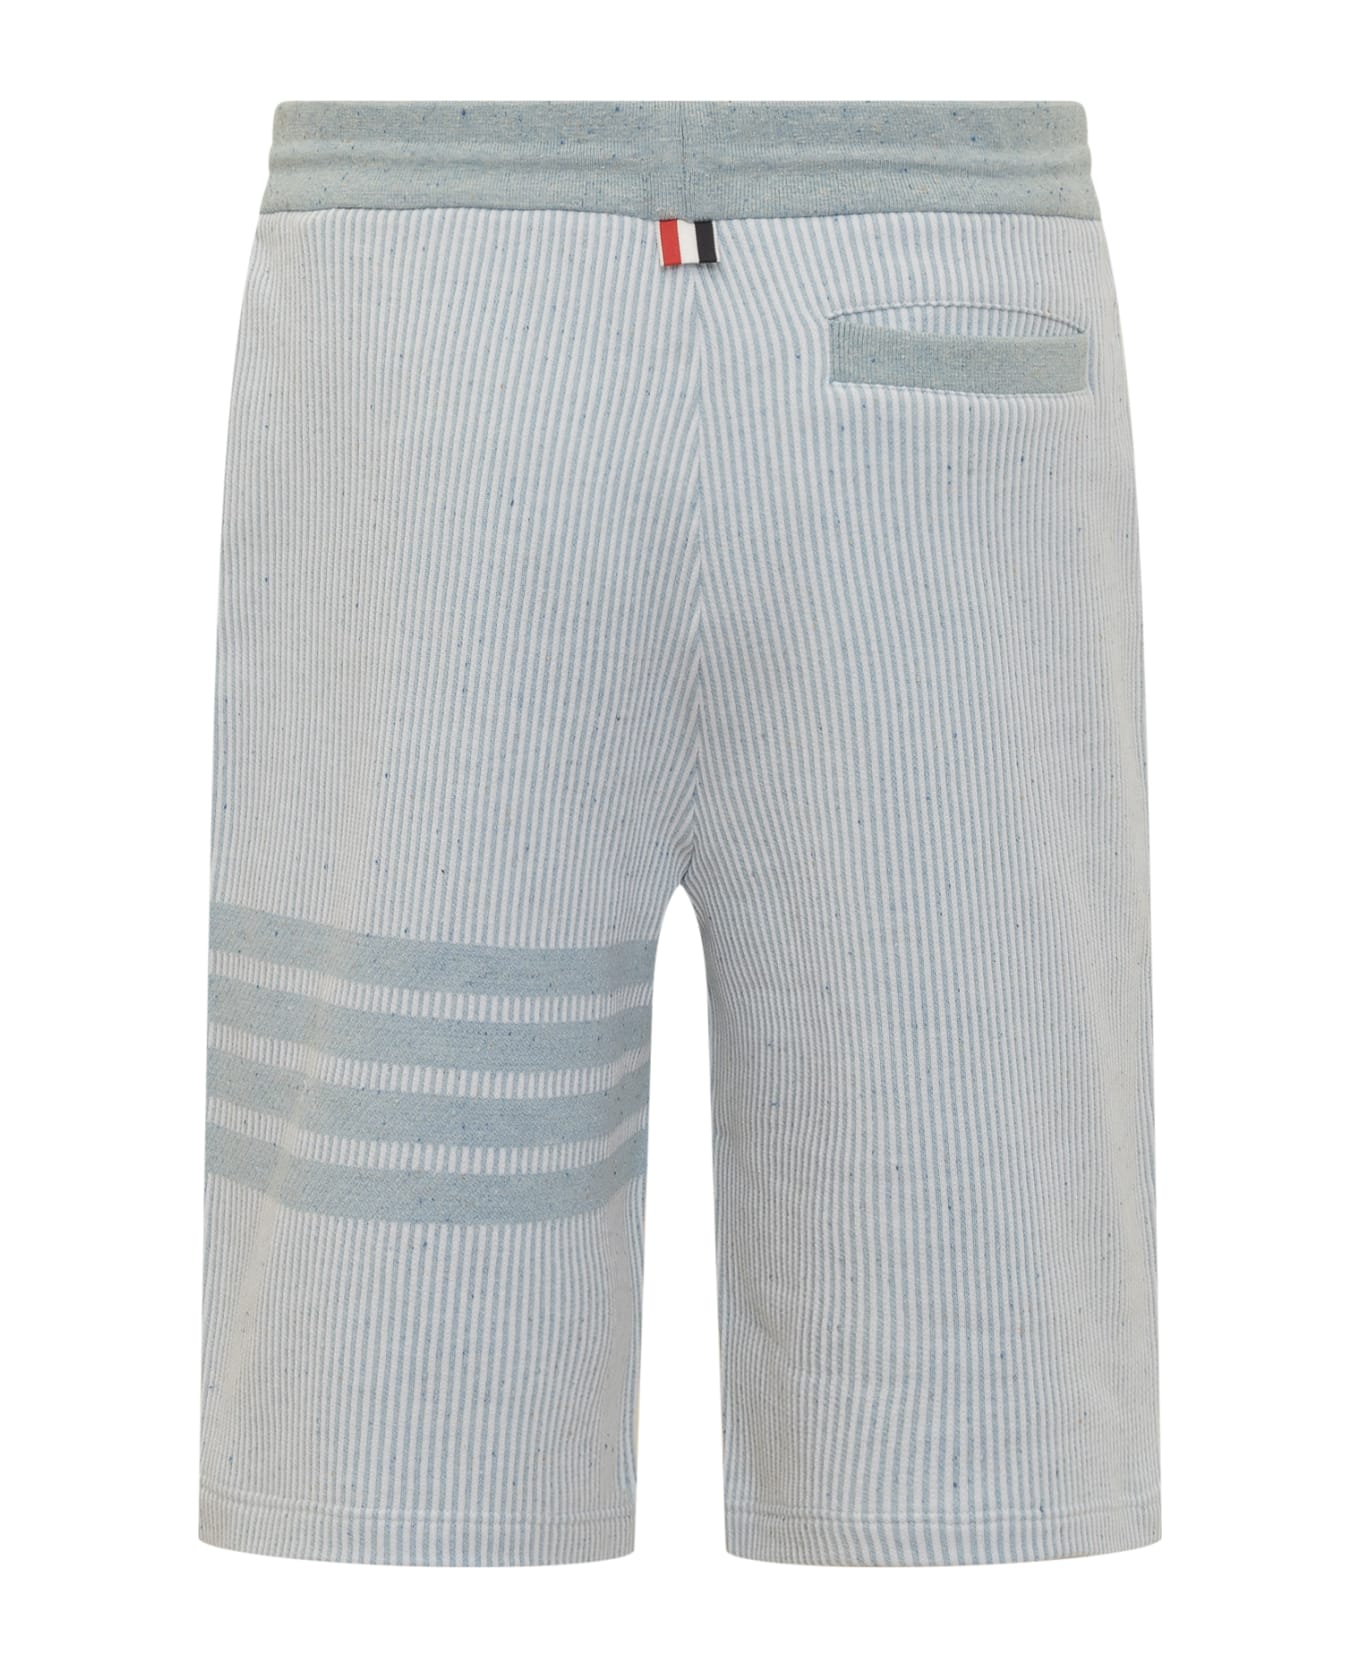 Thom Browne 4bar Shorts - Light blue